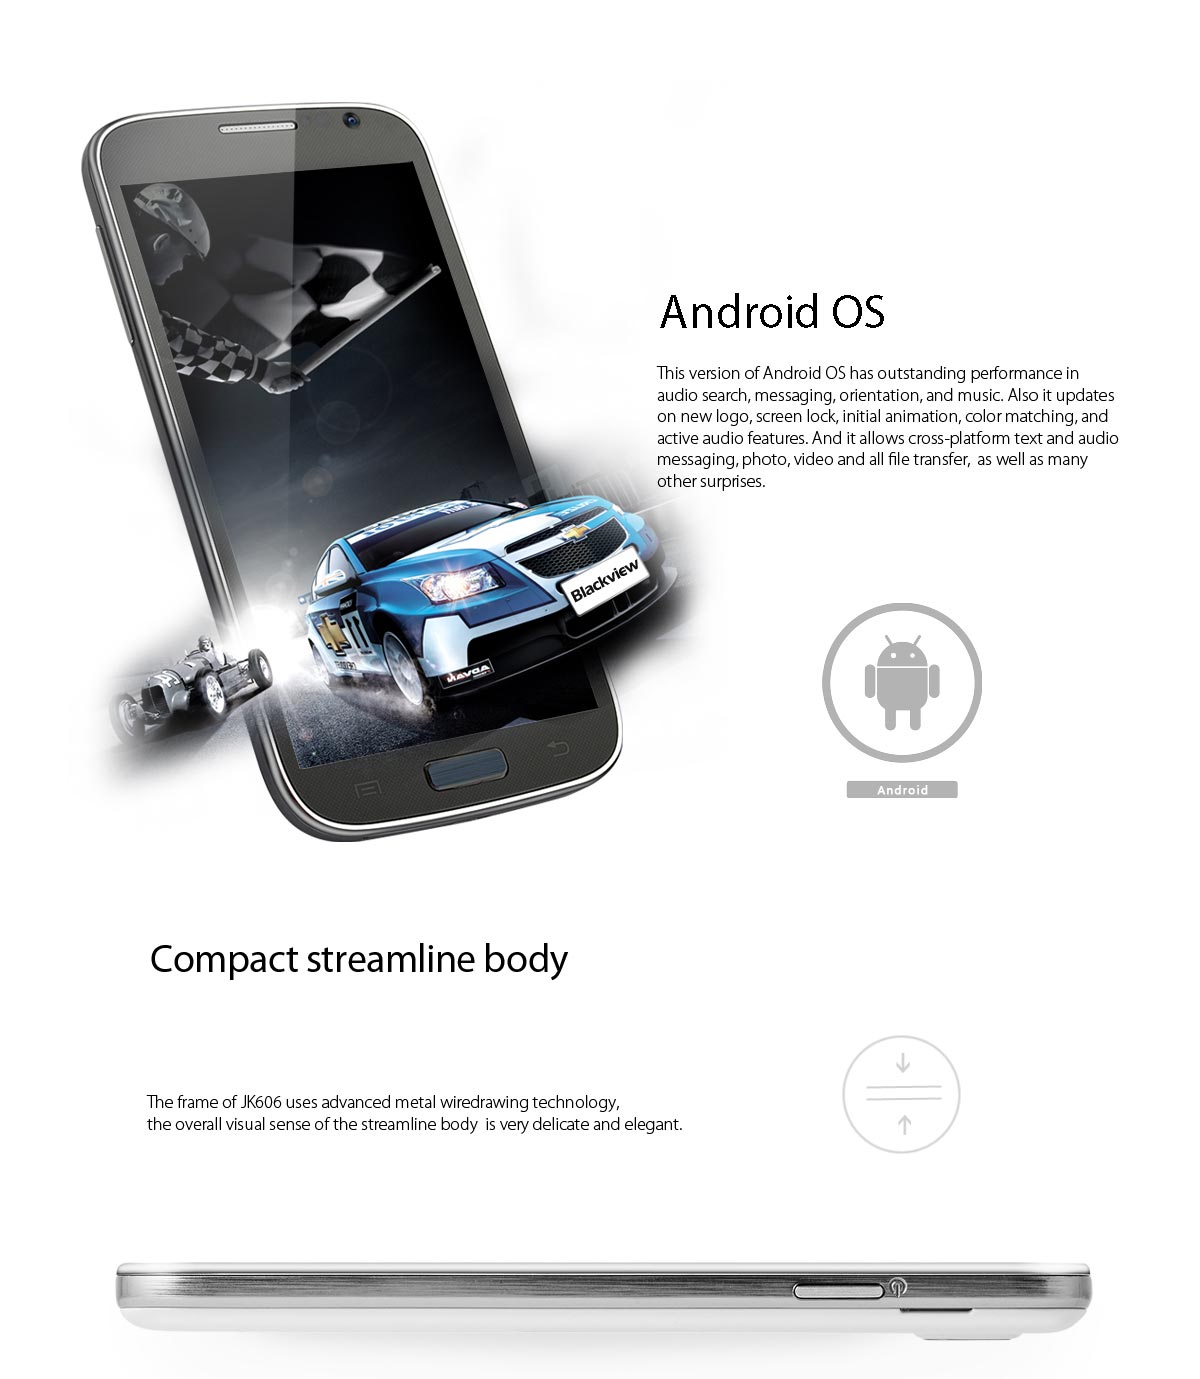 blackview jk606 android smartphone